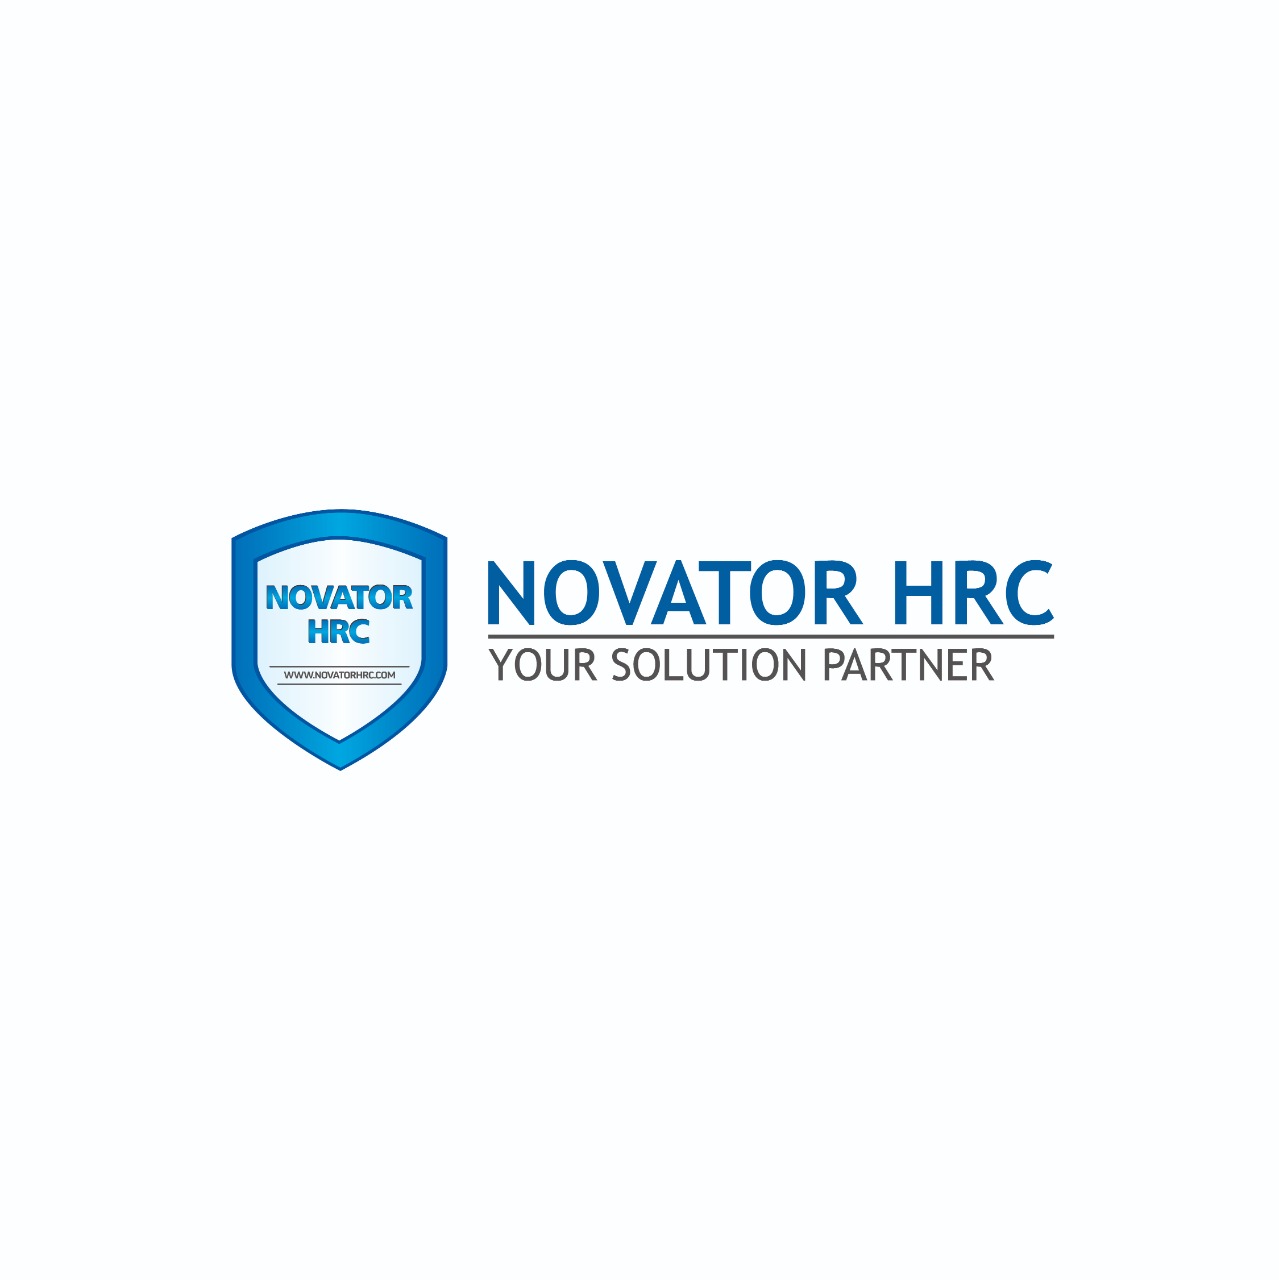 Novator HRC